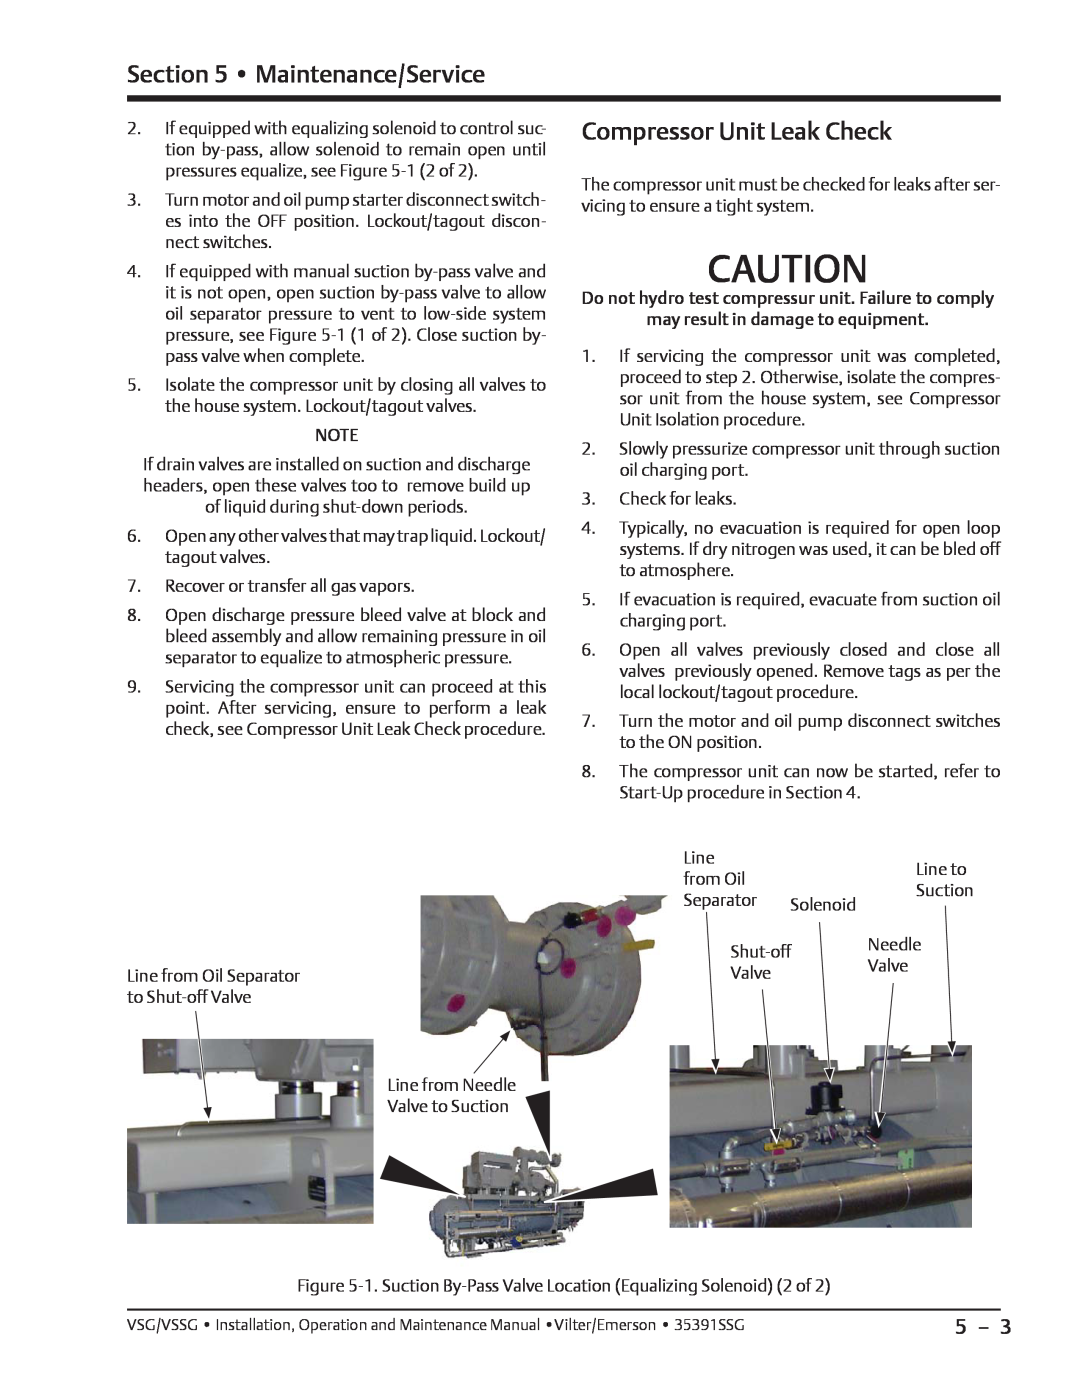 Emerson VSG, VSSG manual Compressor Unit Leak Check, Maintenance/Service 